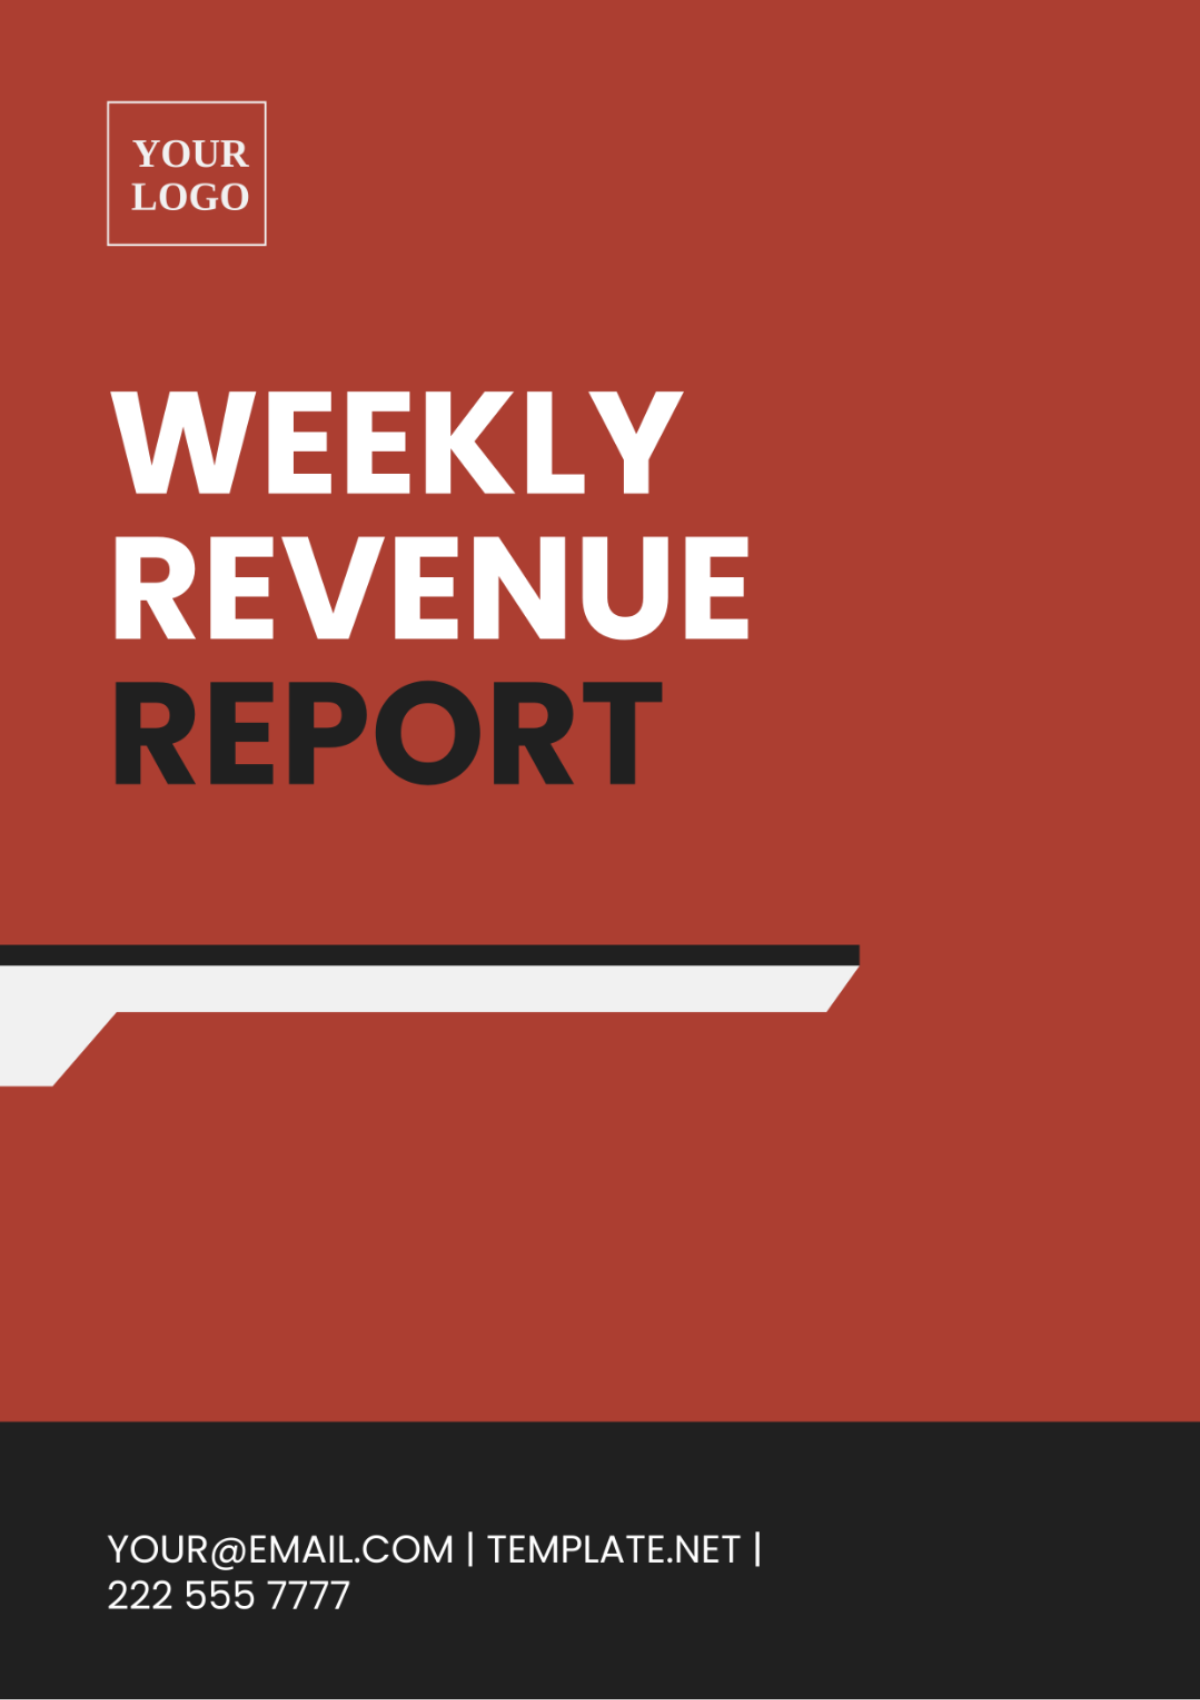 Weekly Revenue Report Template